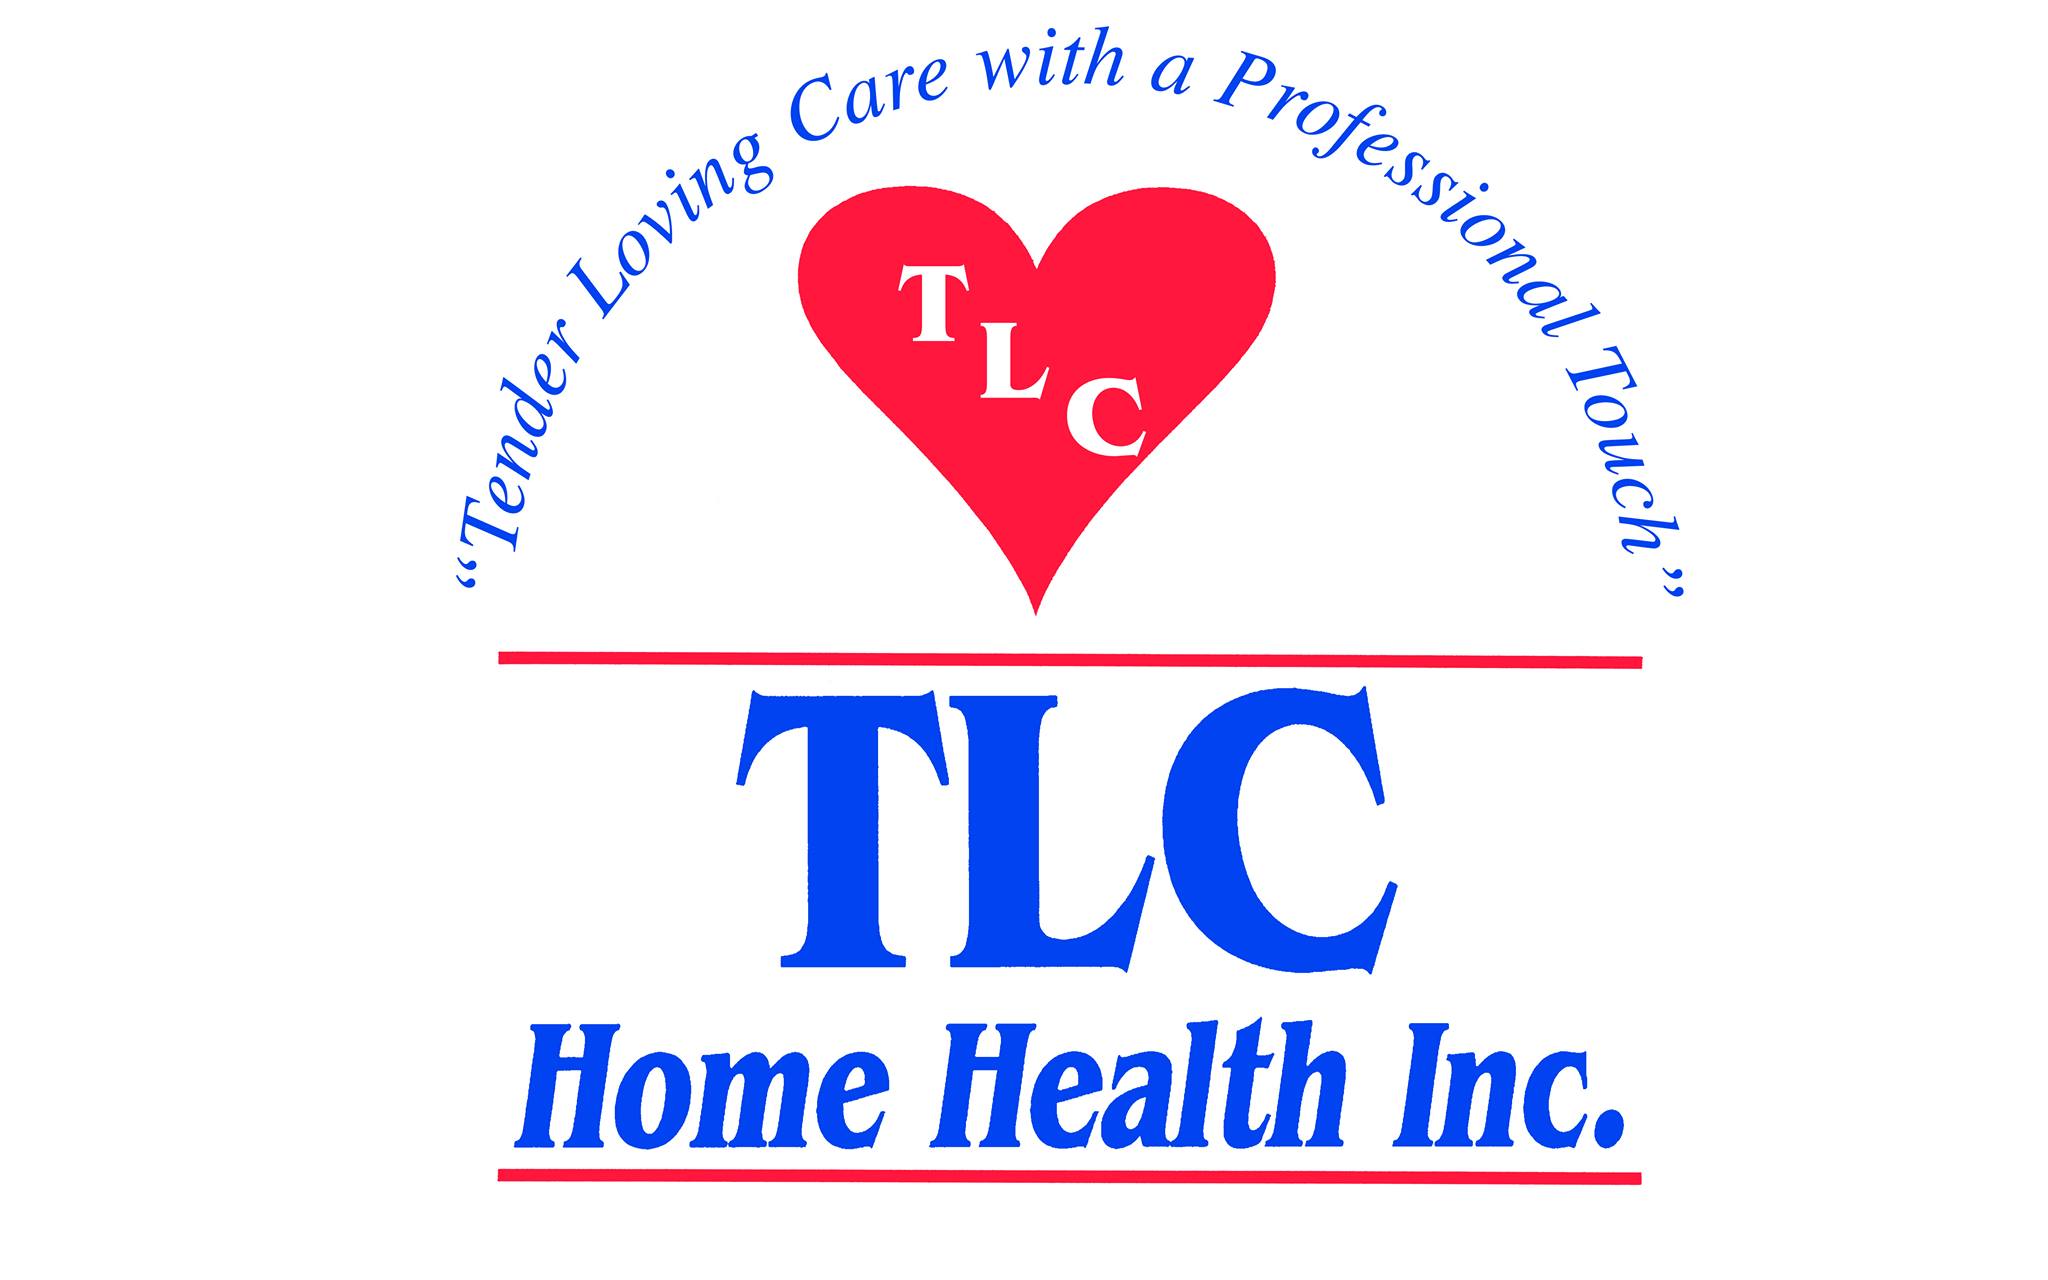 TLC Home Health Care Inc 2018 Talk Award Winner